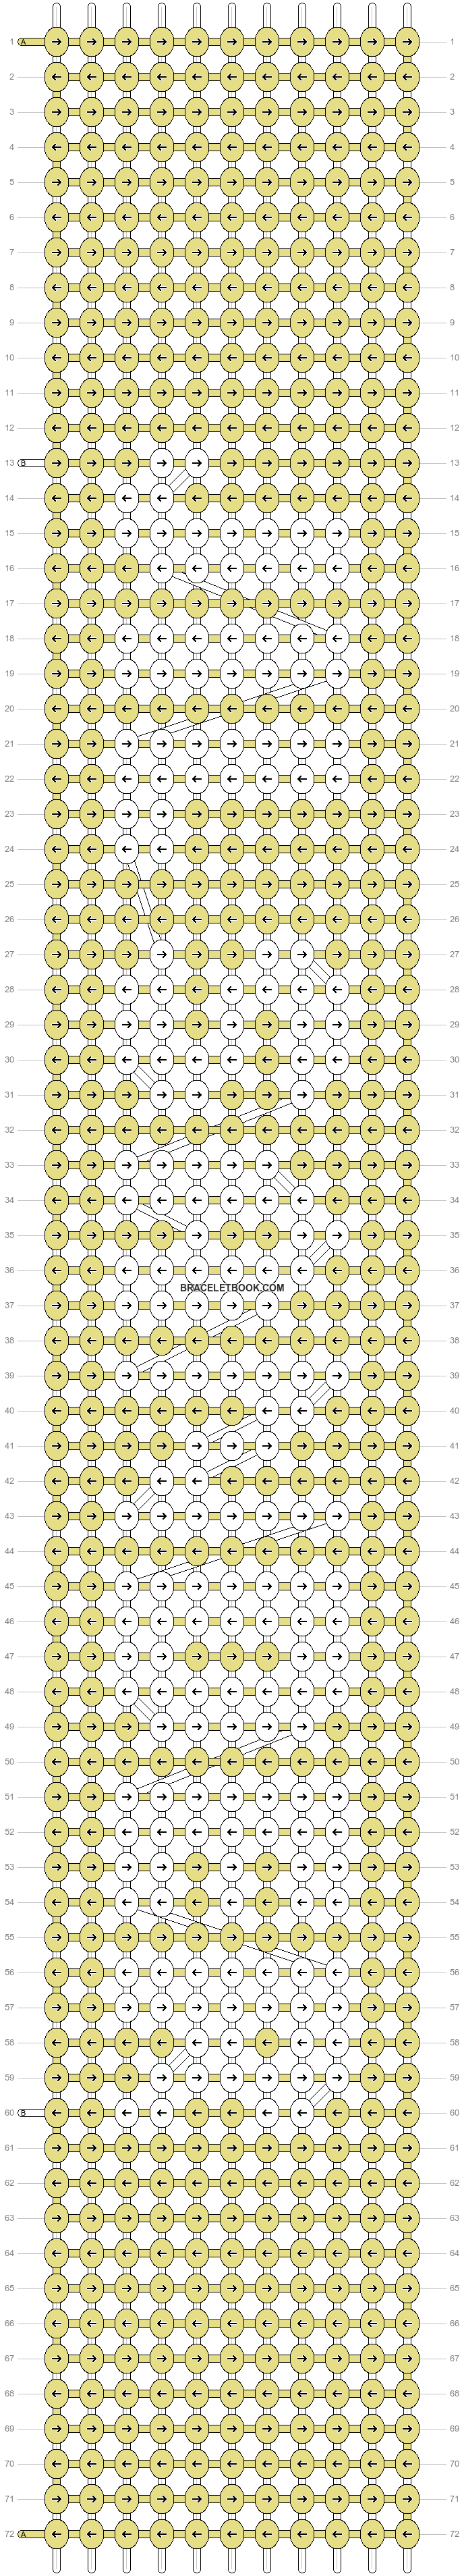 Alpha pattern #60467 variation #107885 pattern